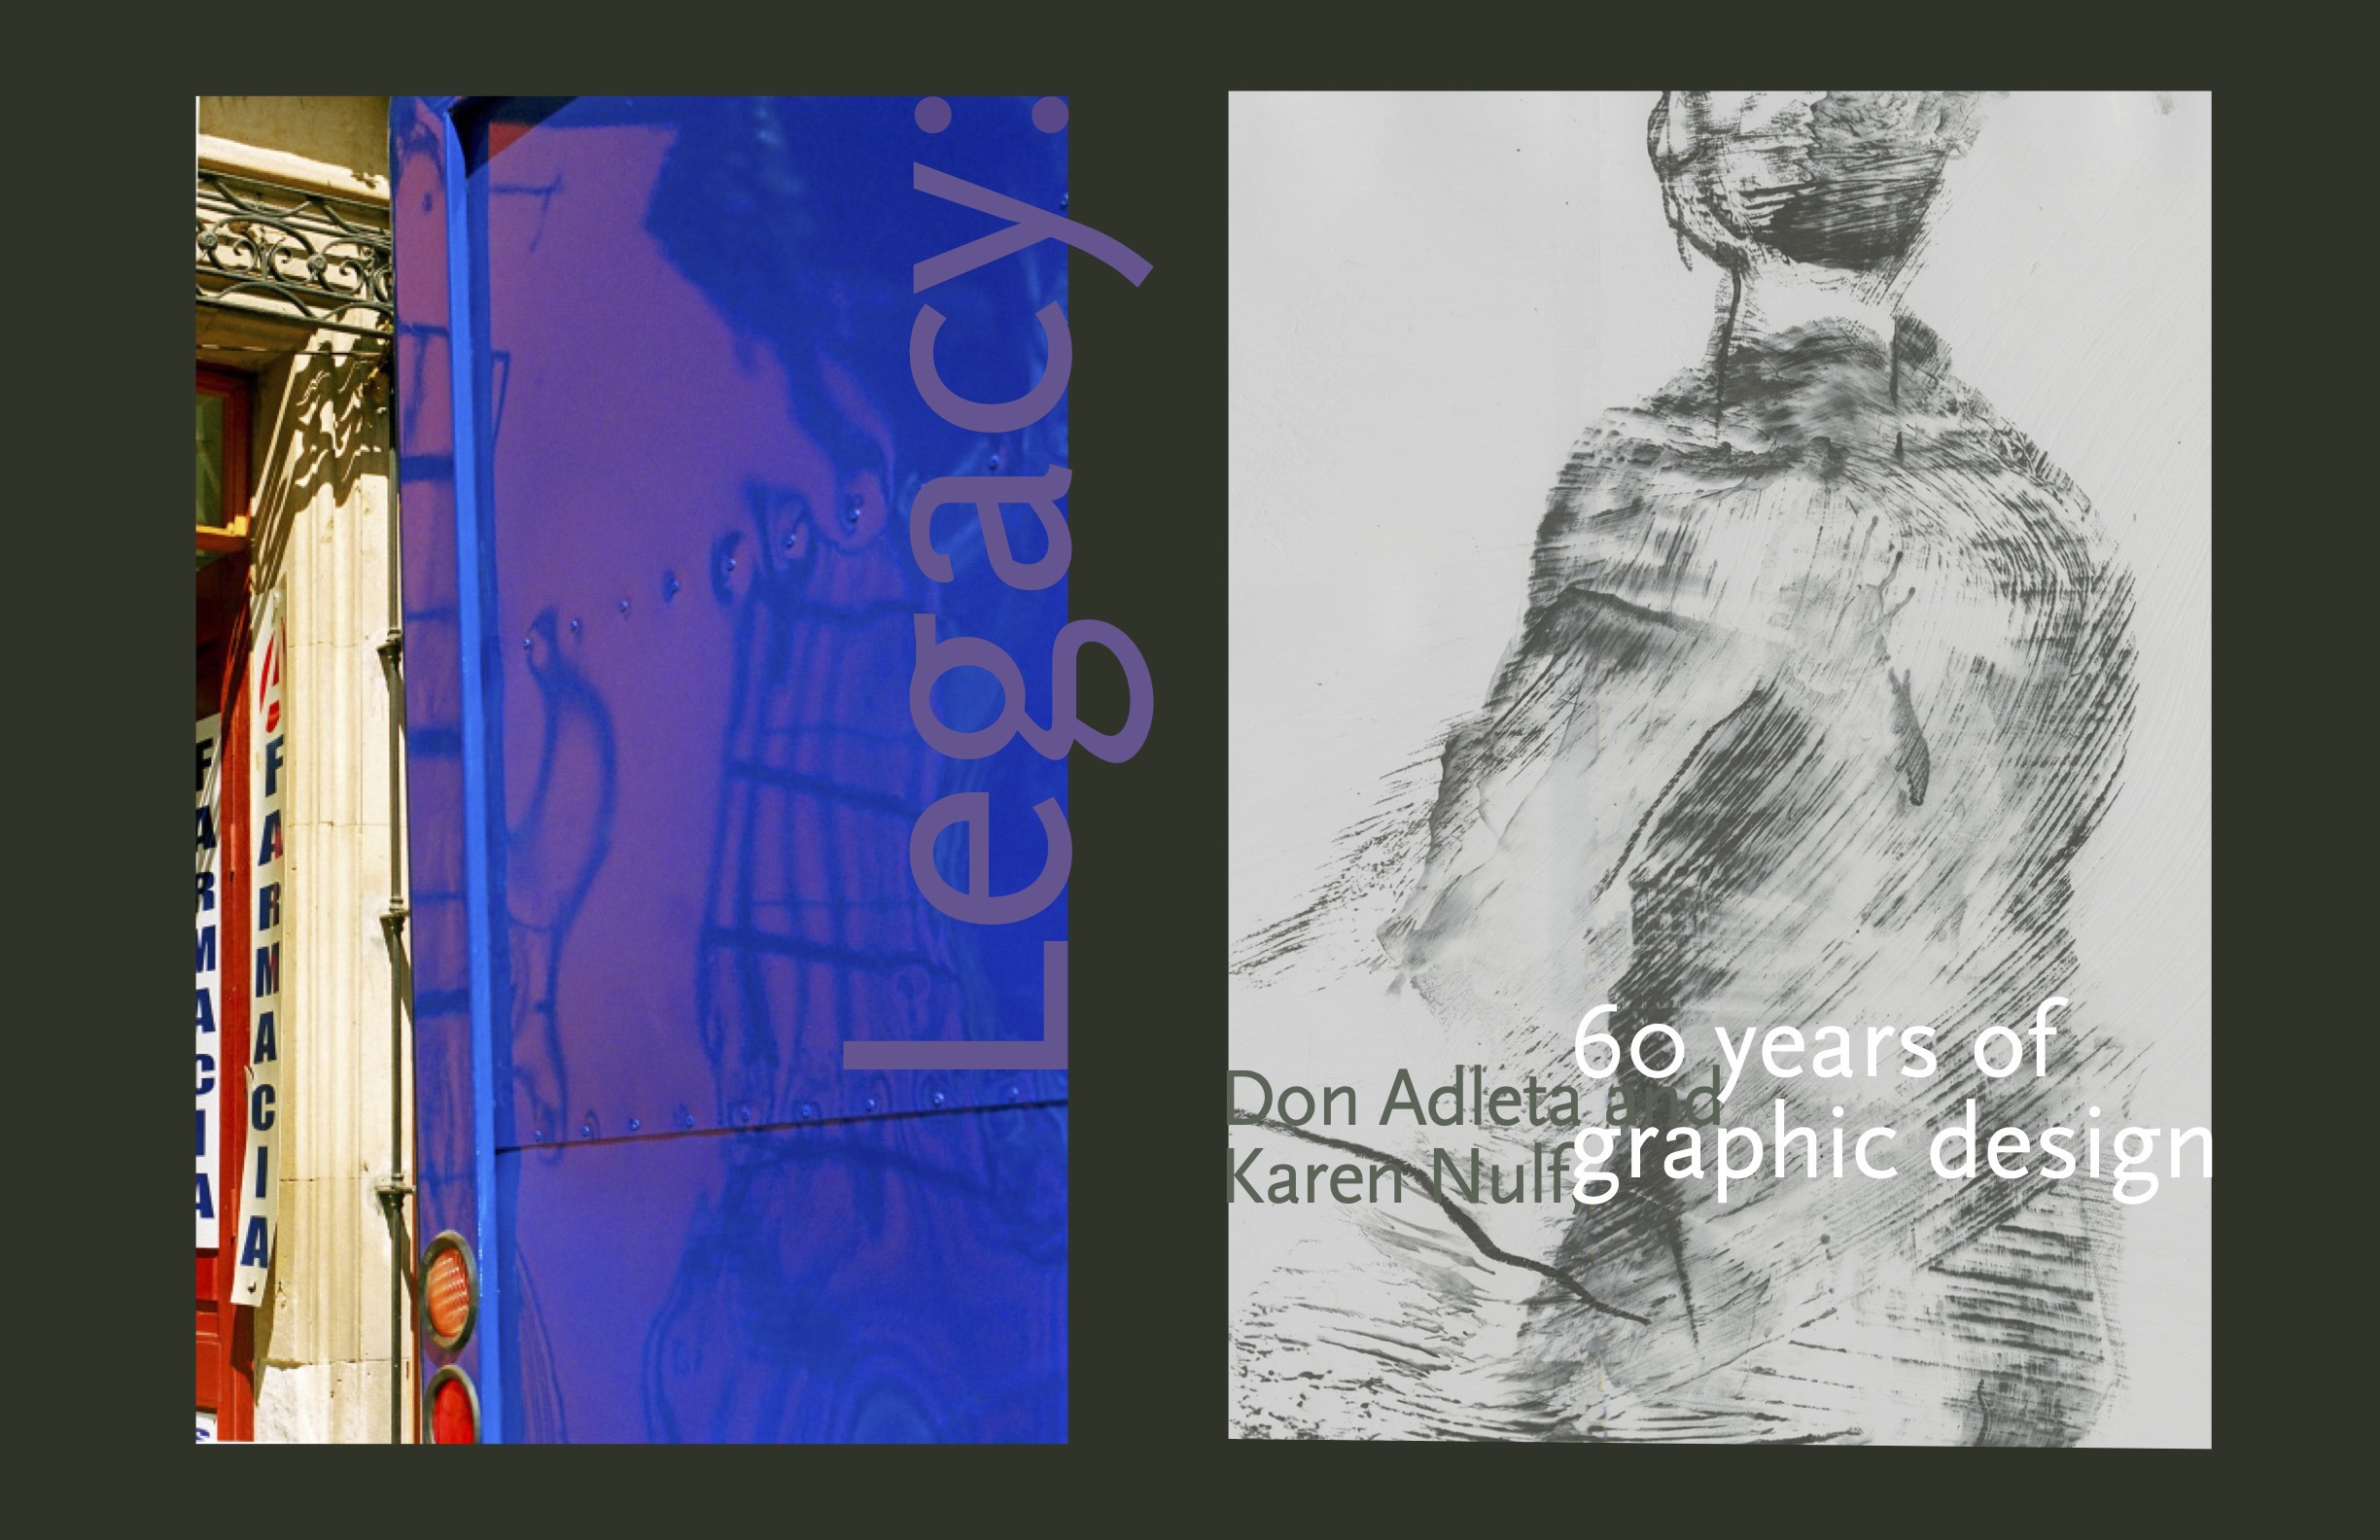 Legacy: Don Adleta and Karen Nulf, 60 years of graphic design promo image